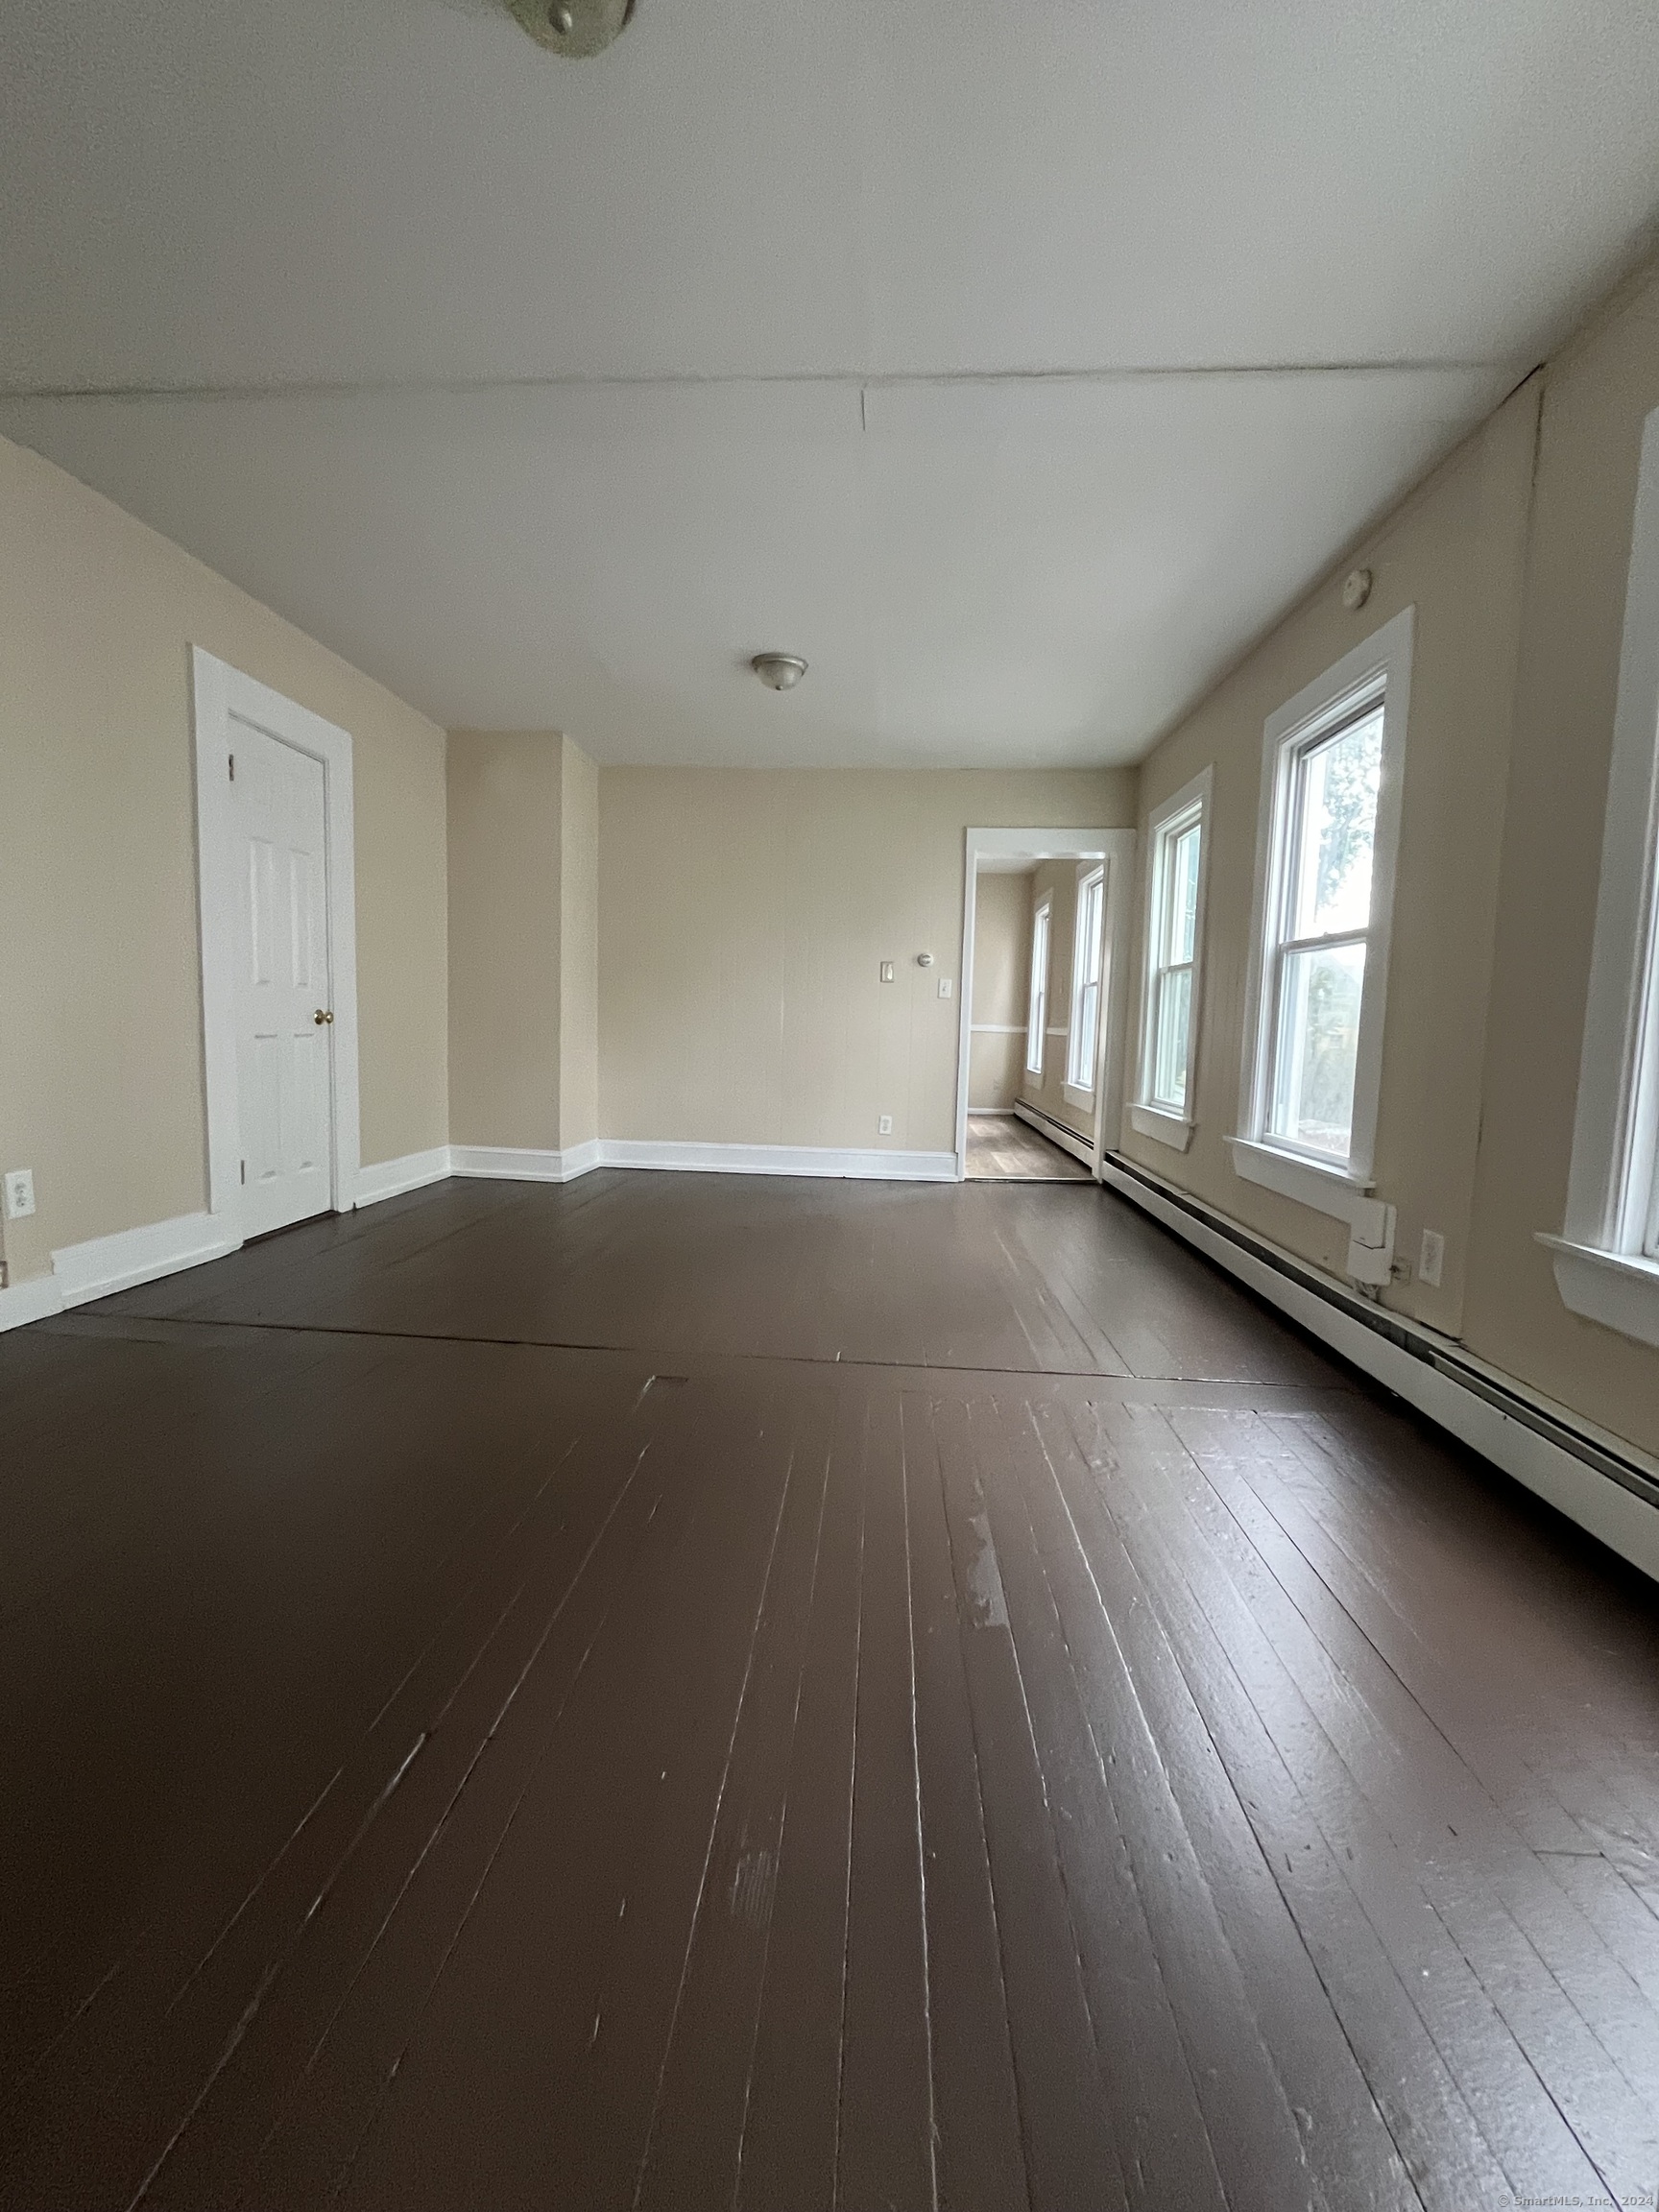 Rental Property at 33 Dewey Street, New Britain, Connecticut - Bedrooms: 2 
Bathrooms: 1 
Rooms: 5  - $1,525 MO.